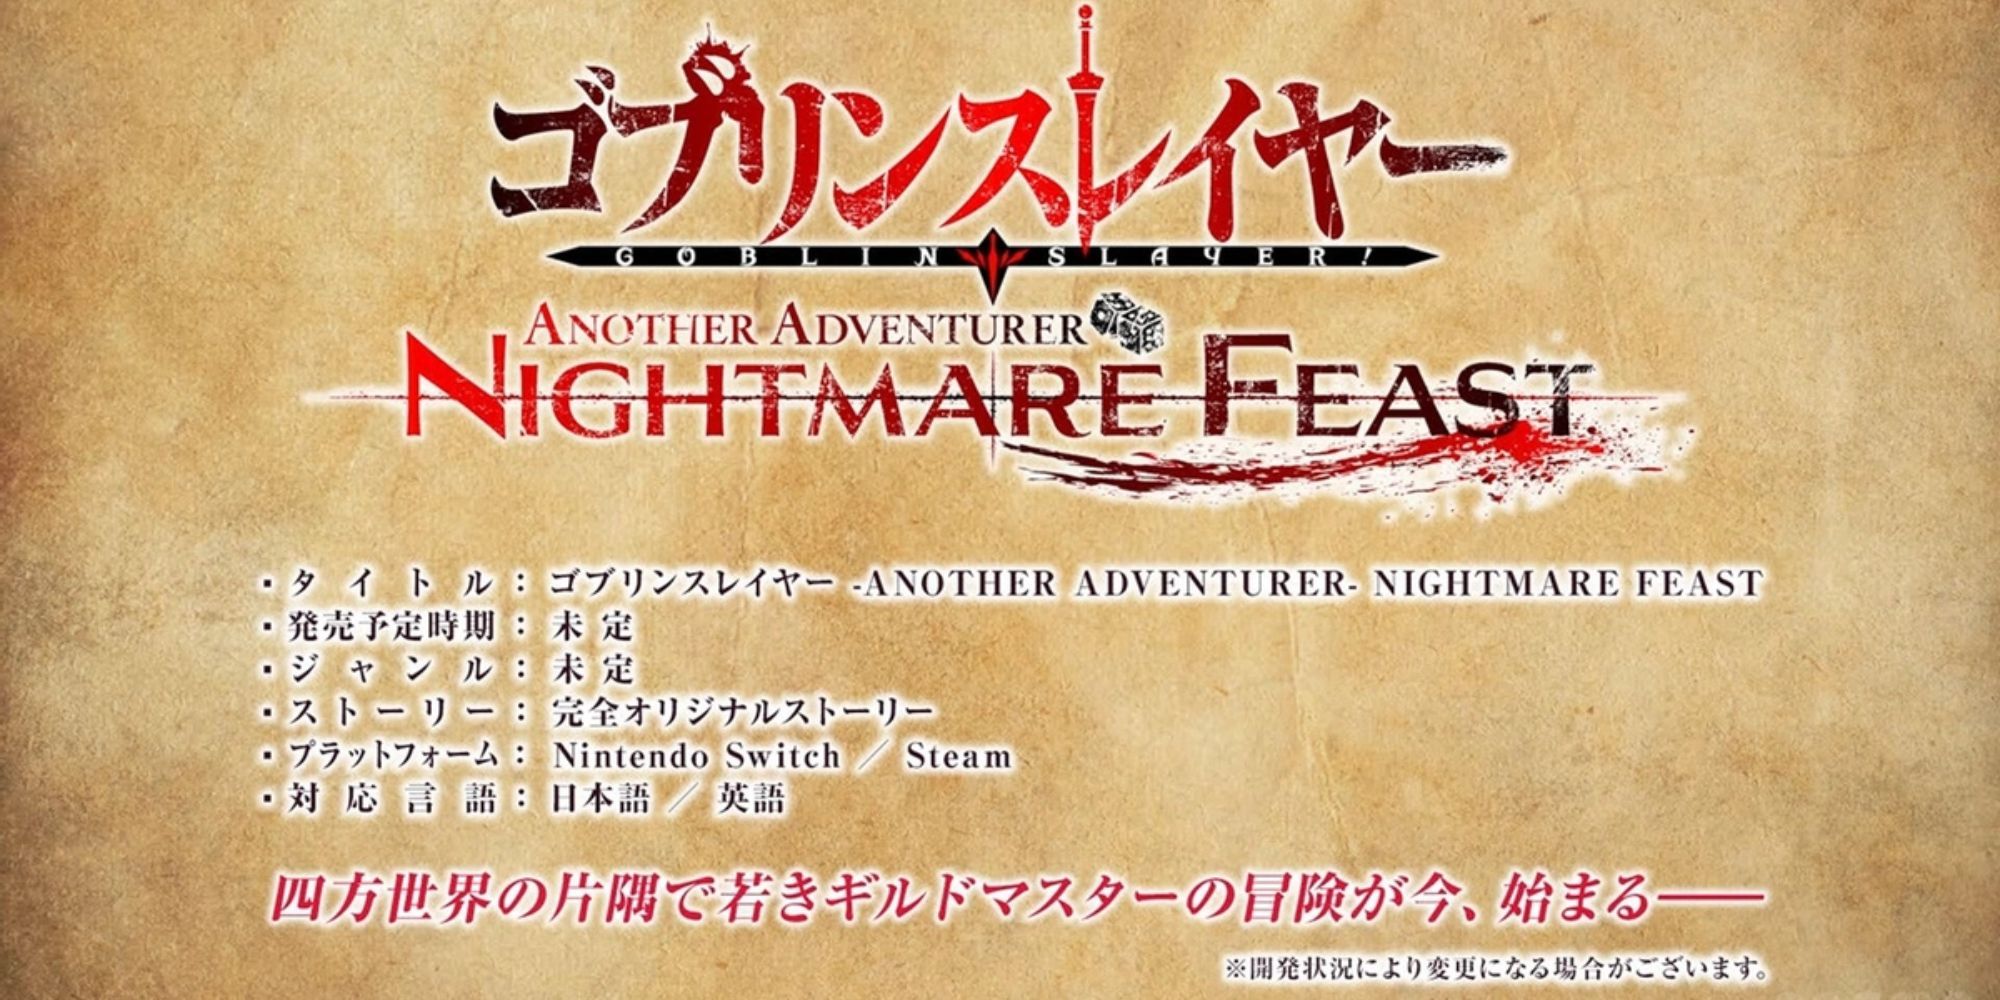 Goblin Slayer Another Adventurer Nightmare Feast Announcement